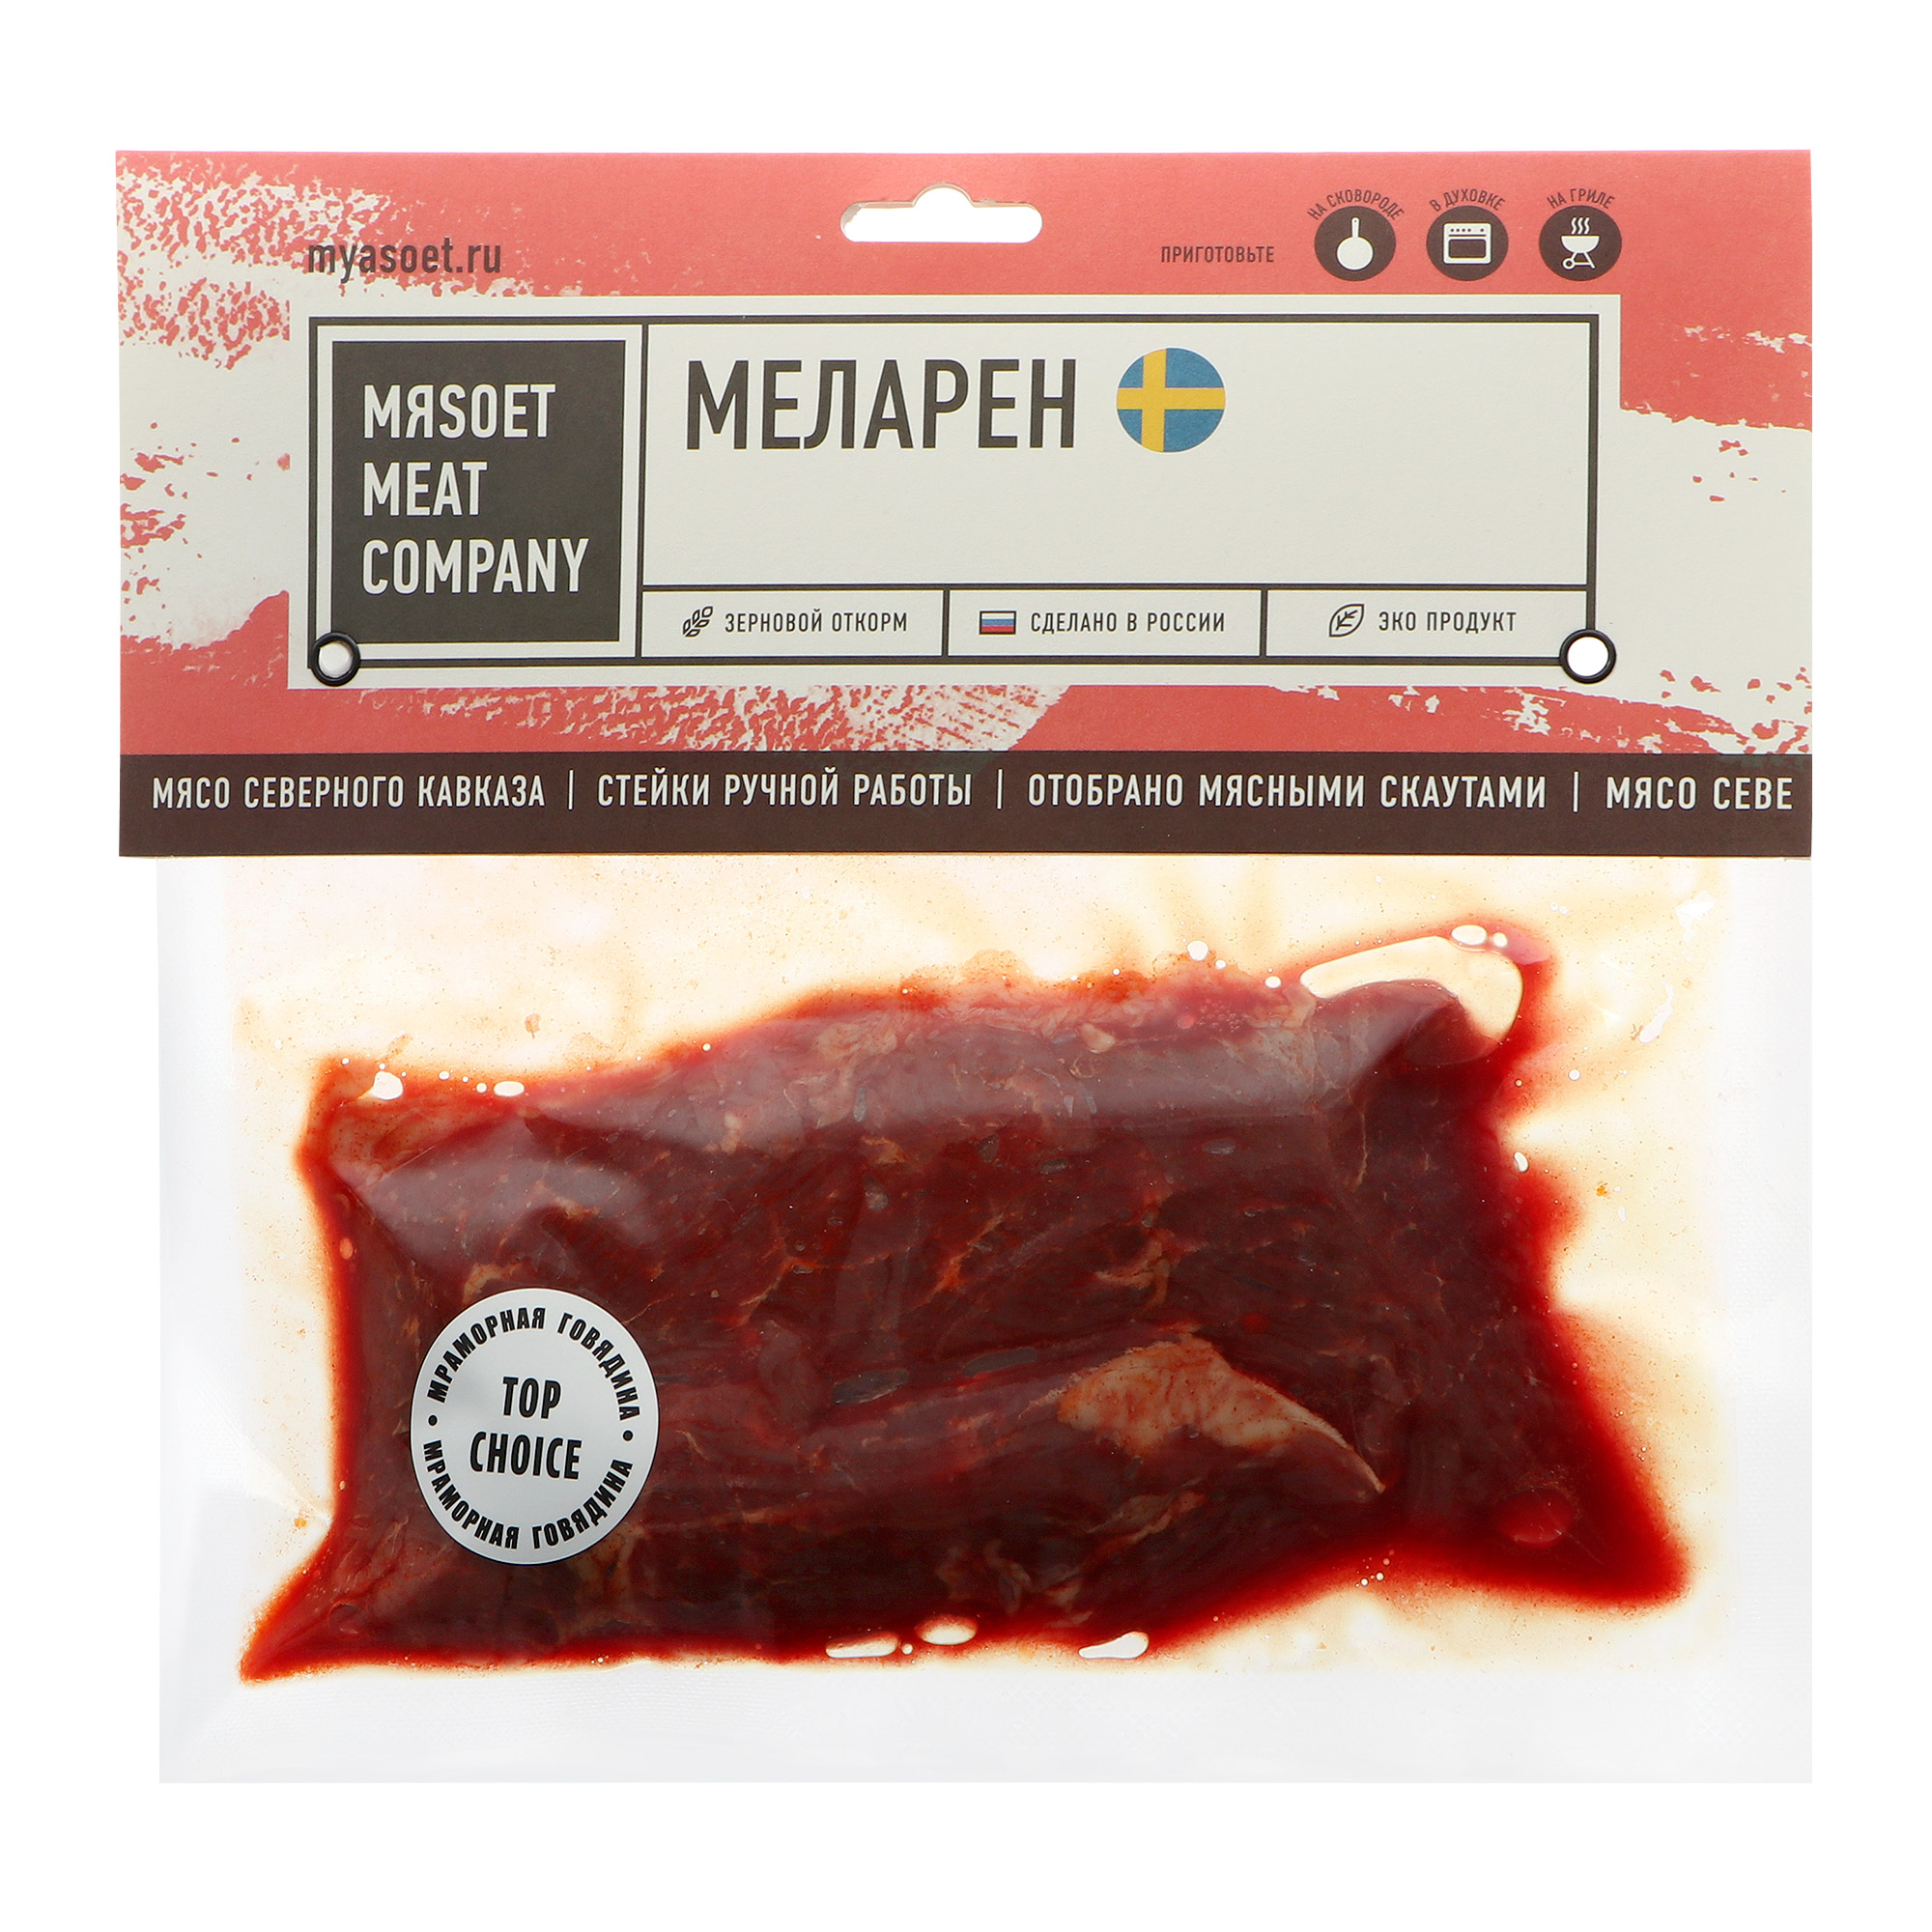 Стейк из мраморной говядины Mяsoet Meat Company в маринаде Меларен, 200 г